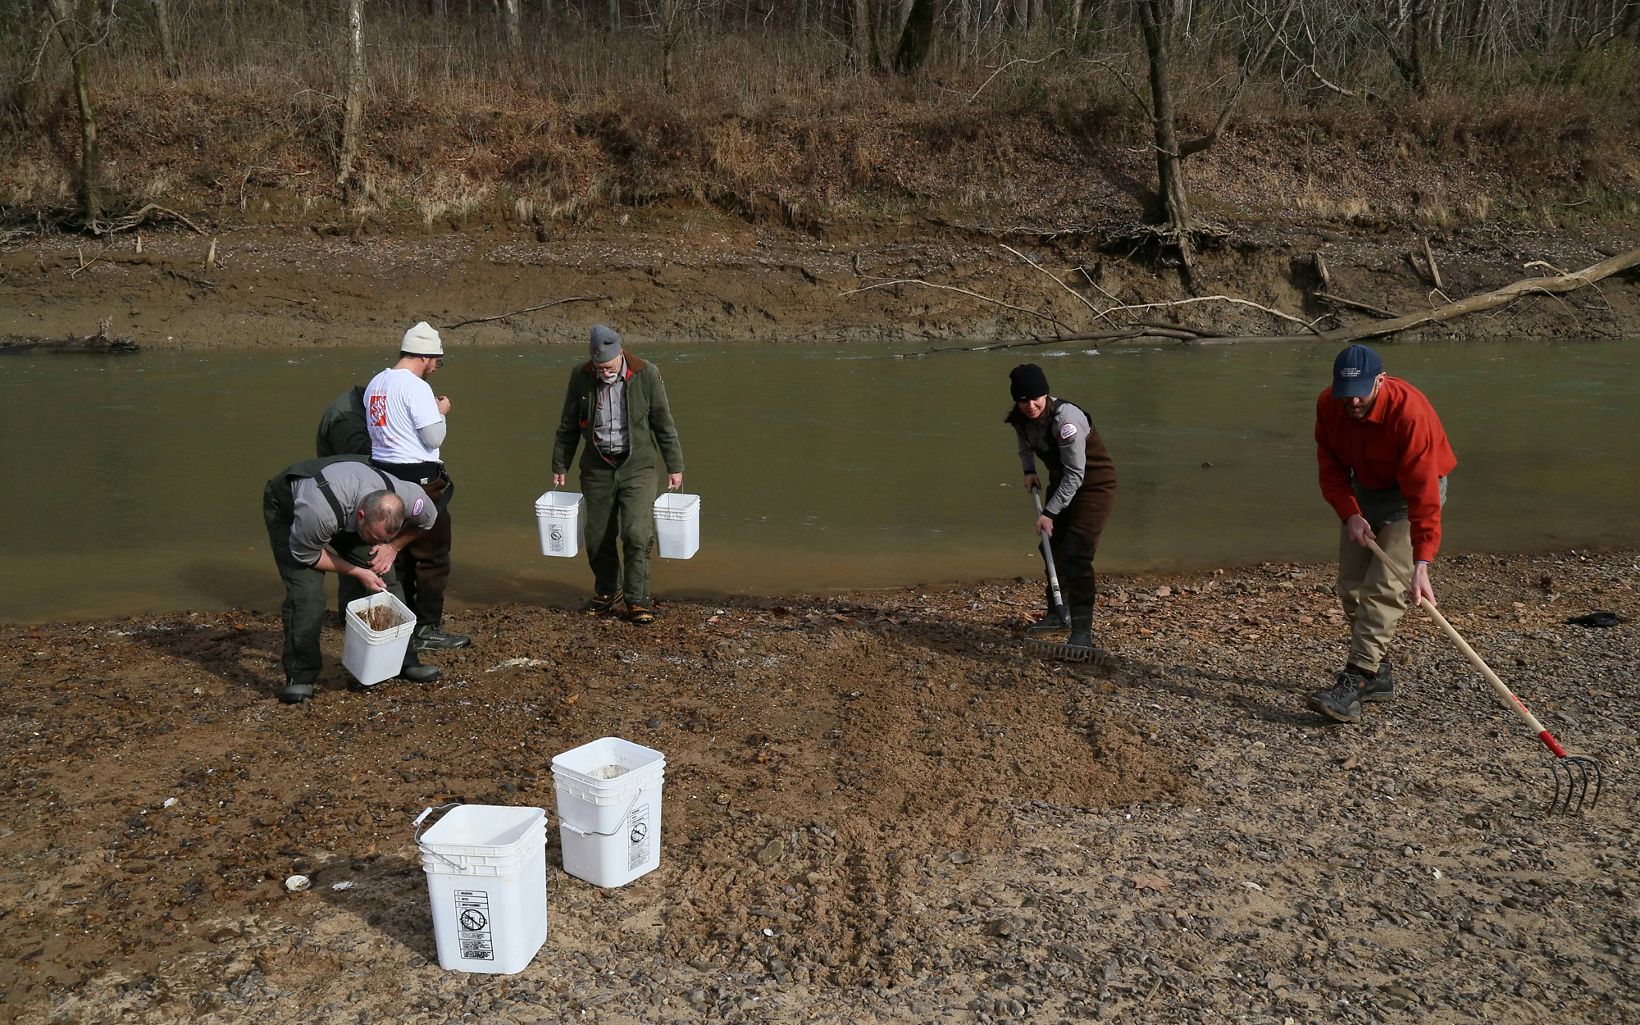 Volunteers carry buckets along a river shoreline.